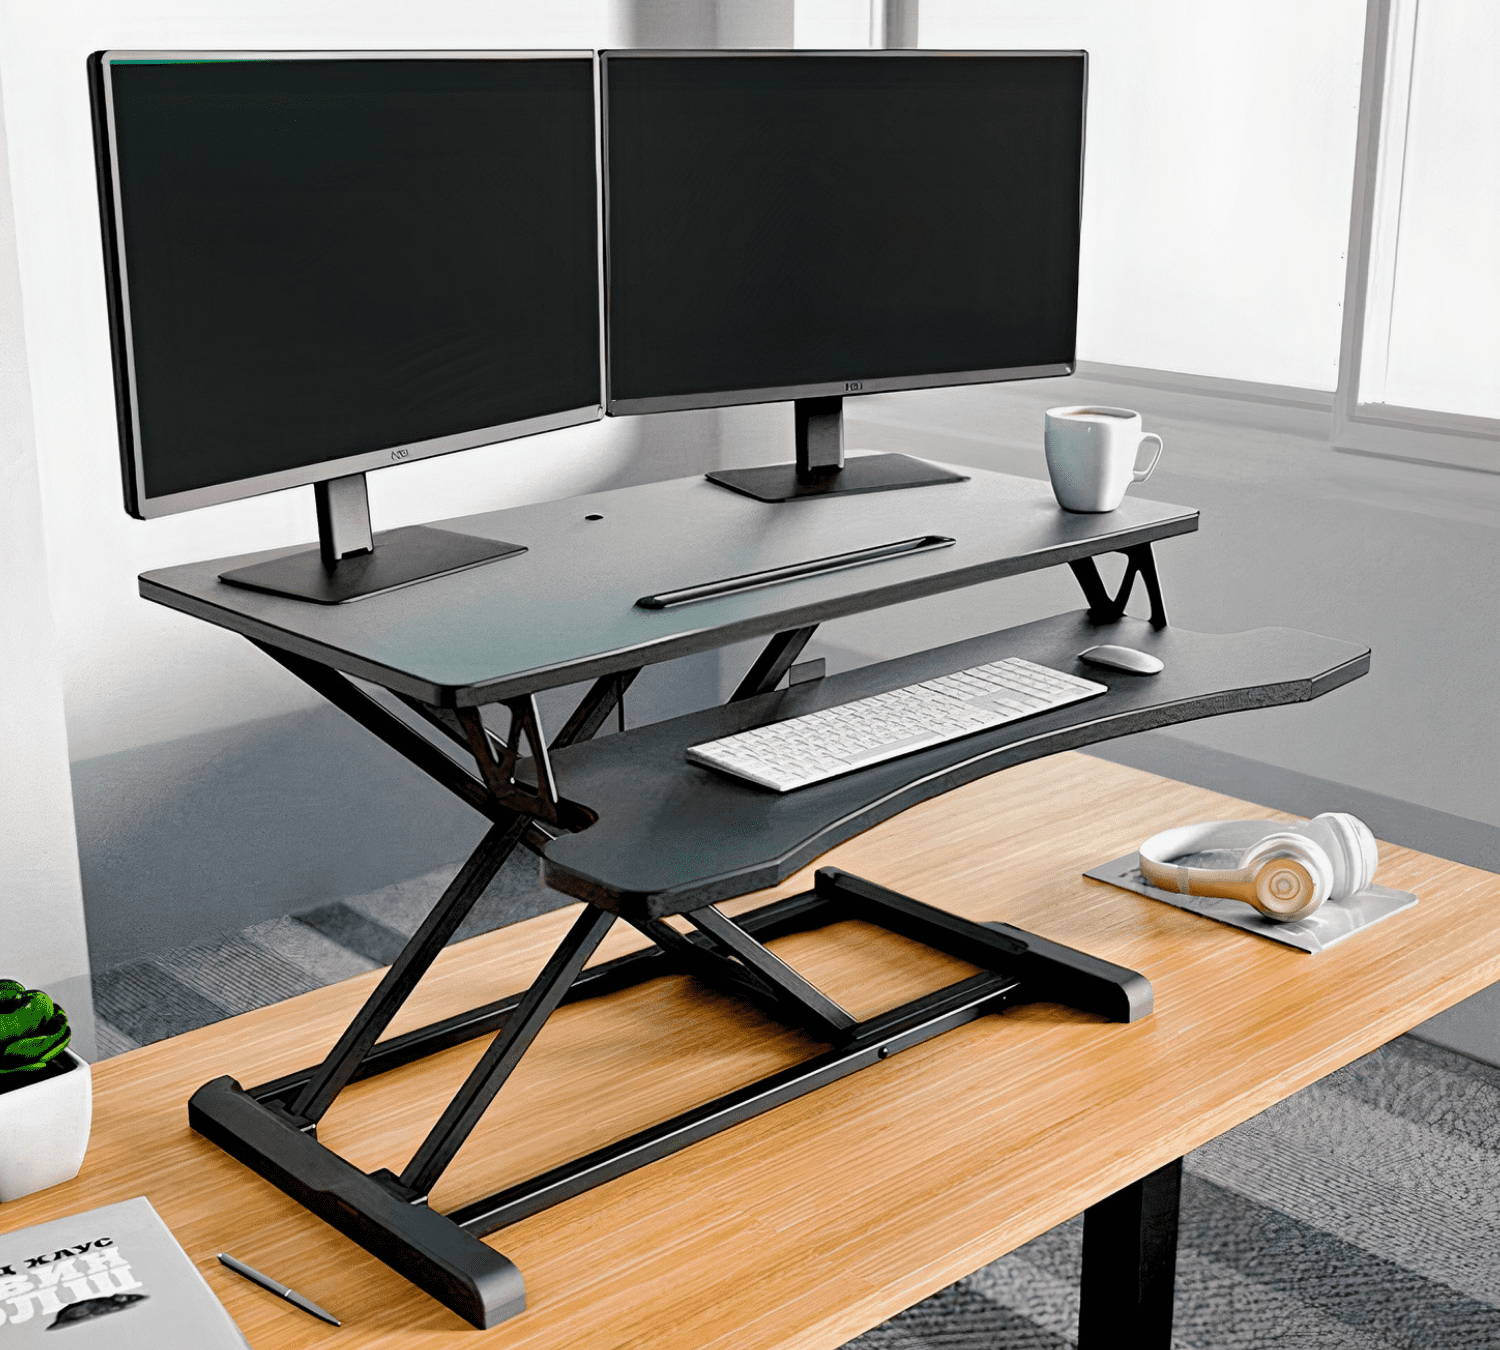 Desk Converter, High Quality Desk Riser, Sit to Stand Desk For Home Office